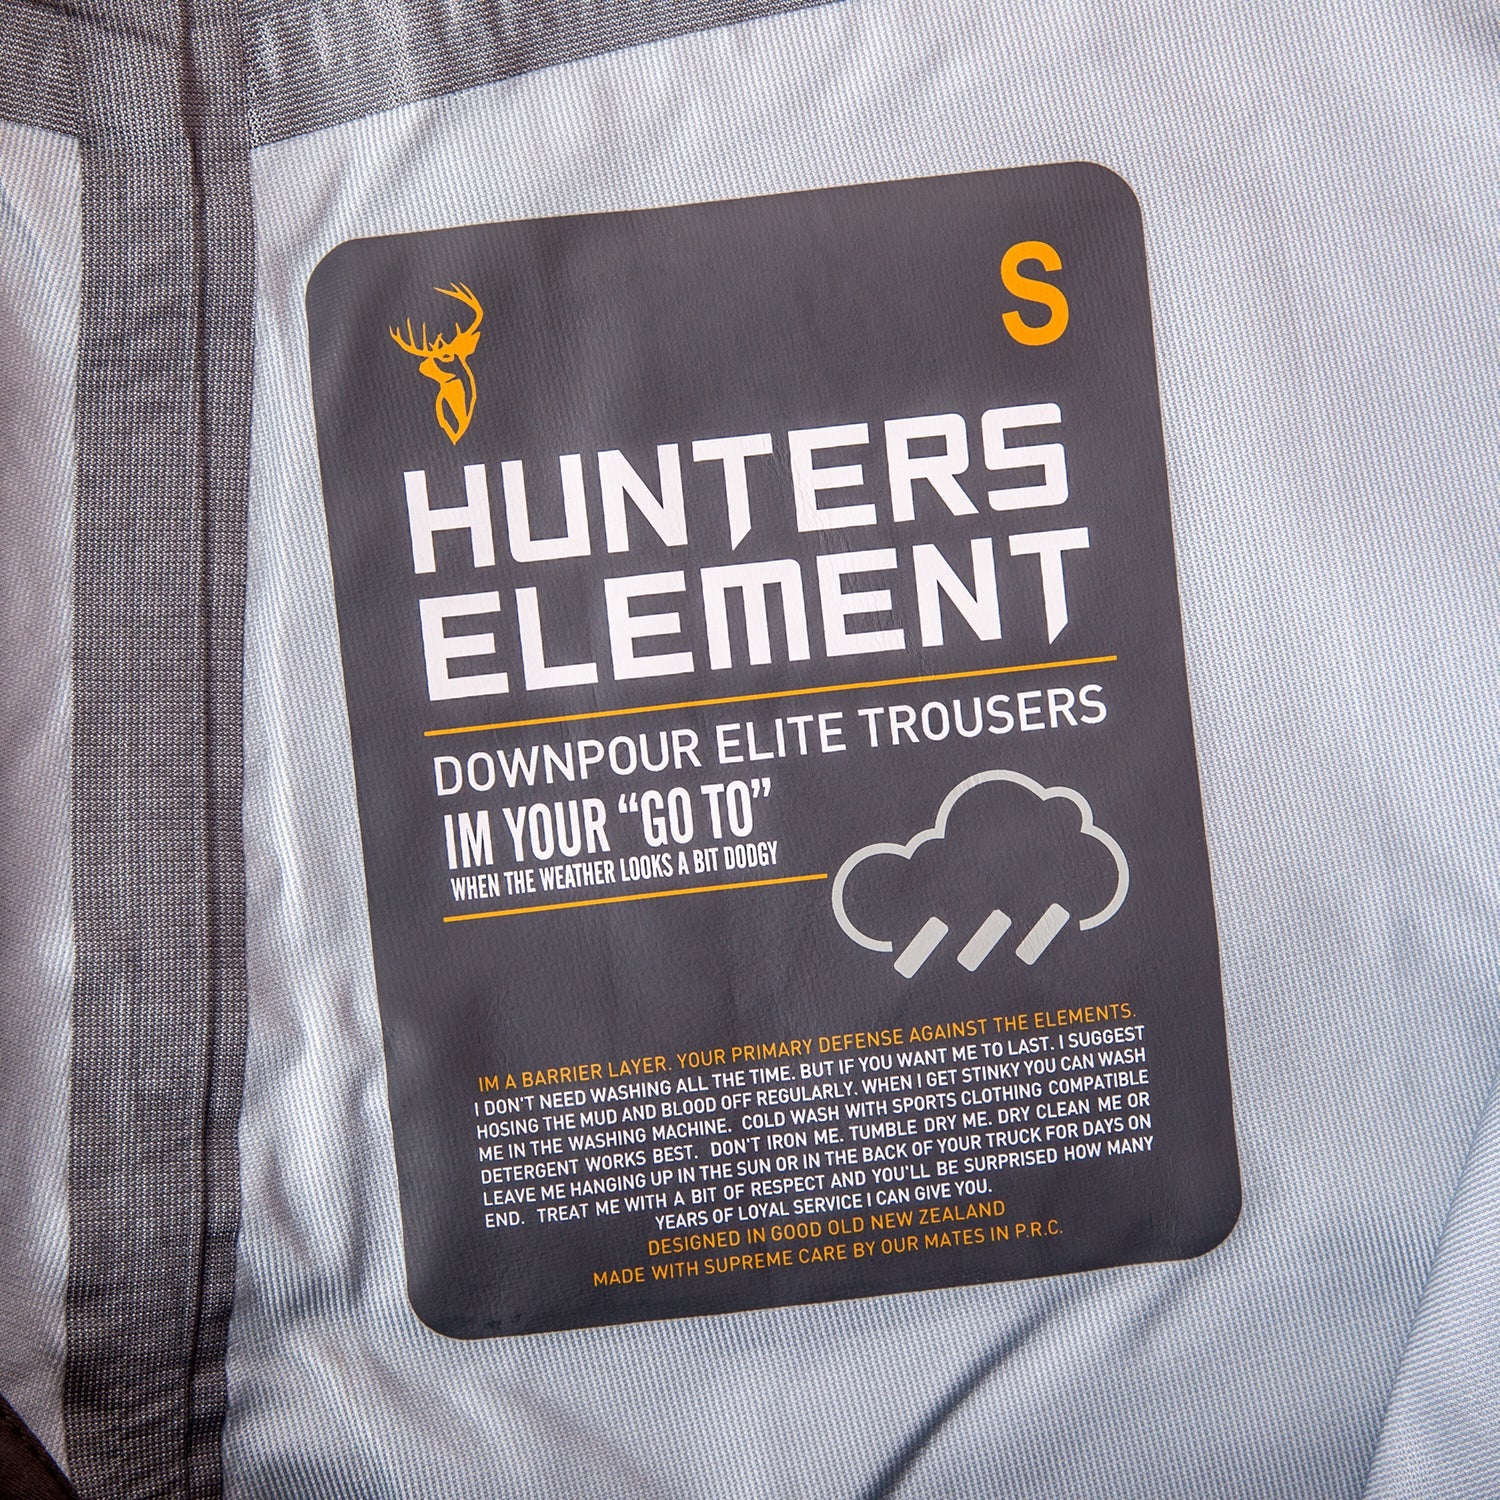 Hunters Element, Downpour Elite Trouser, All-Purpose Hunting Pants, Seam-Sealed